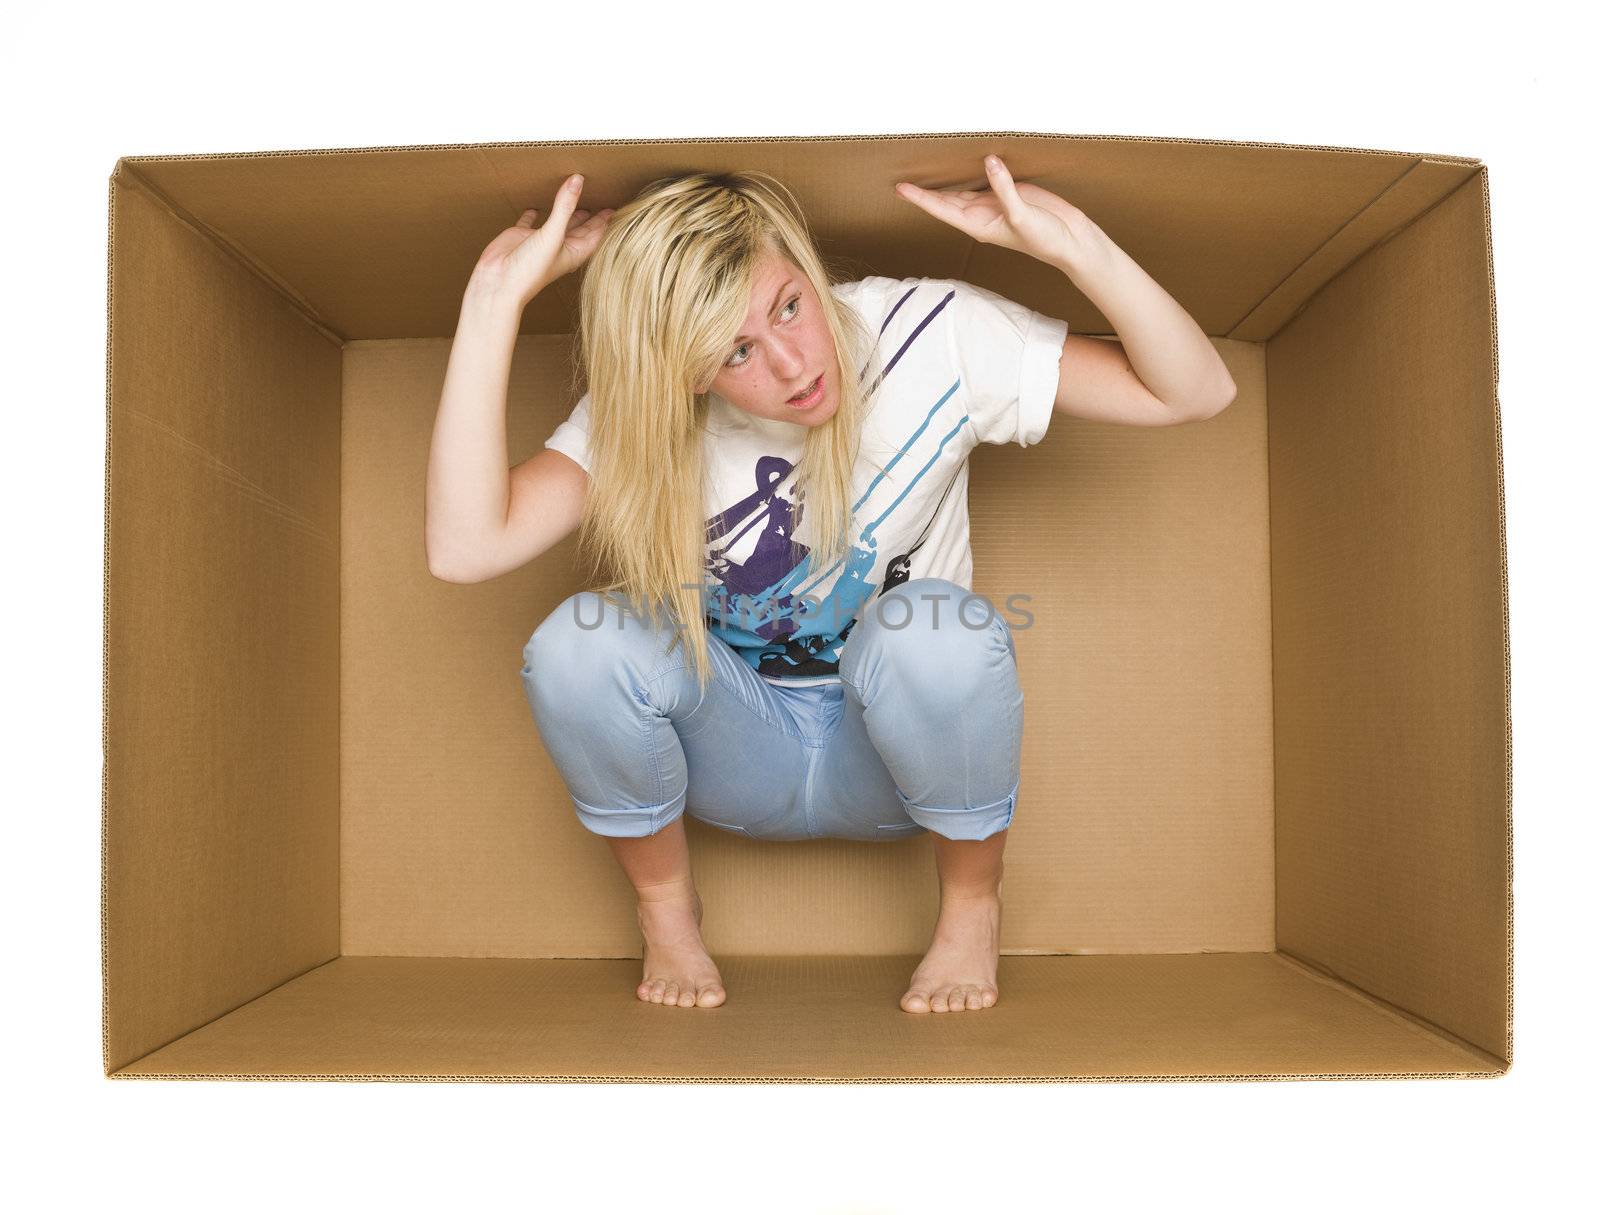 Woman inside a Cradboard Box by gemenacom